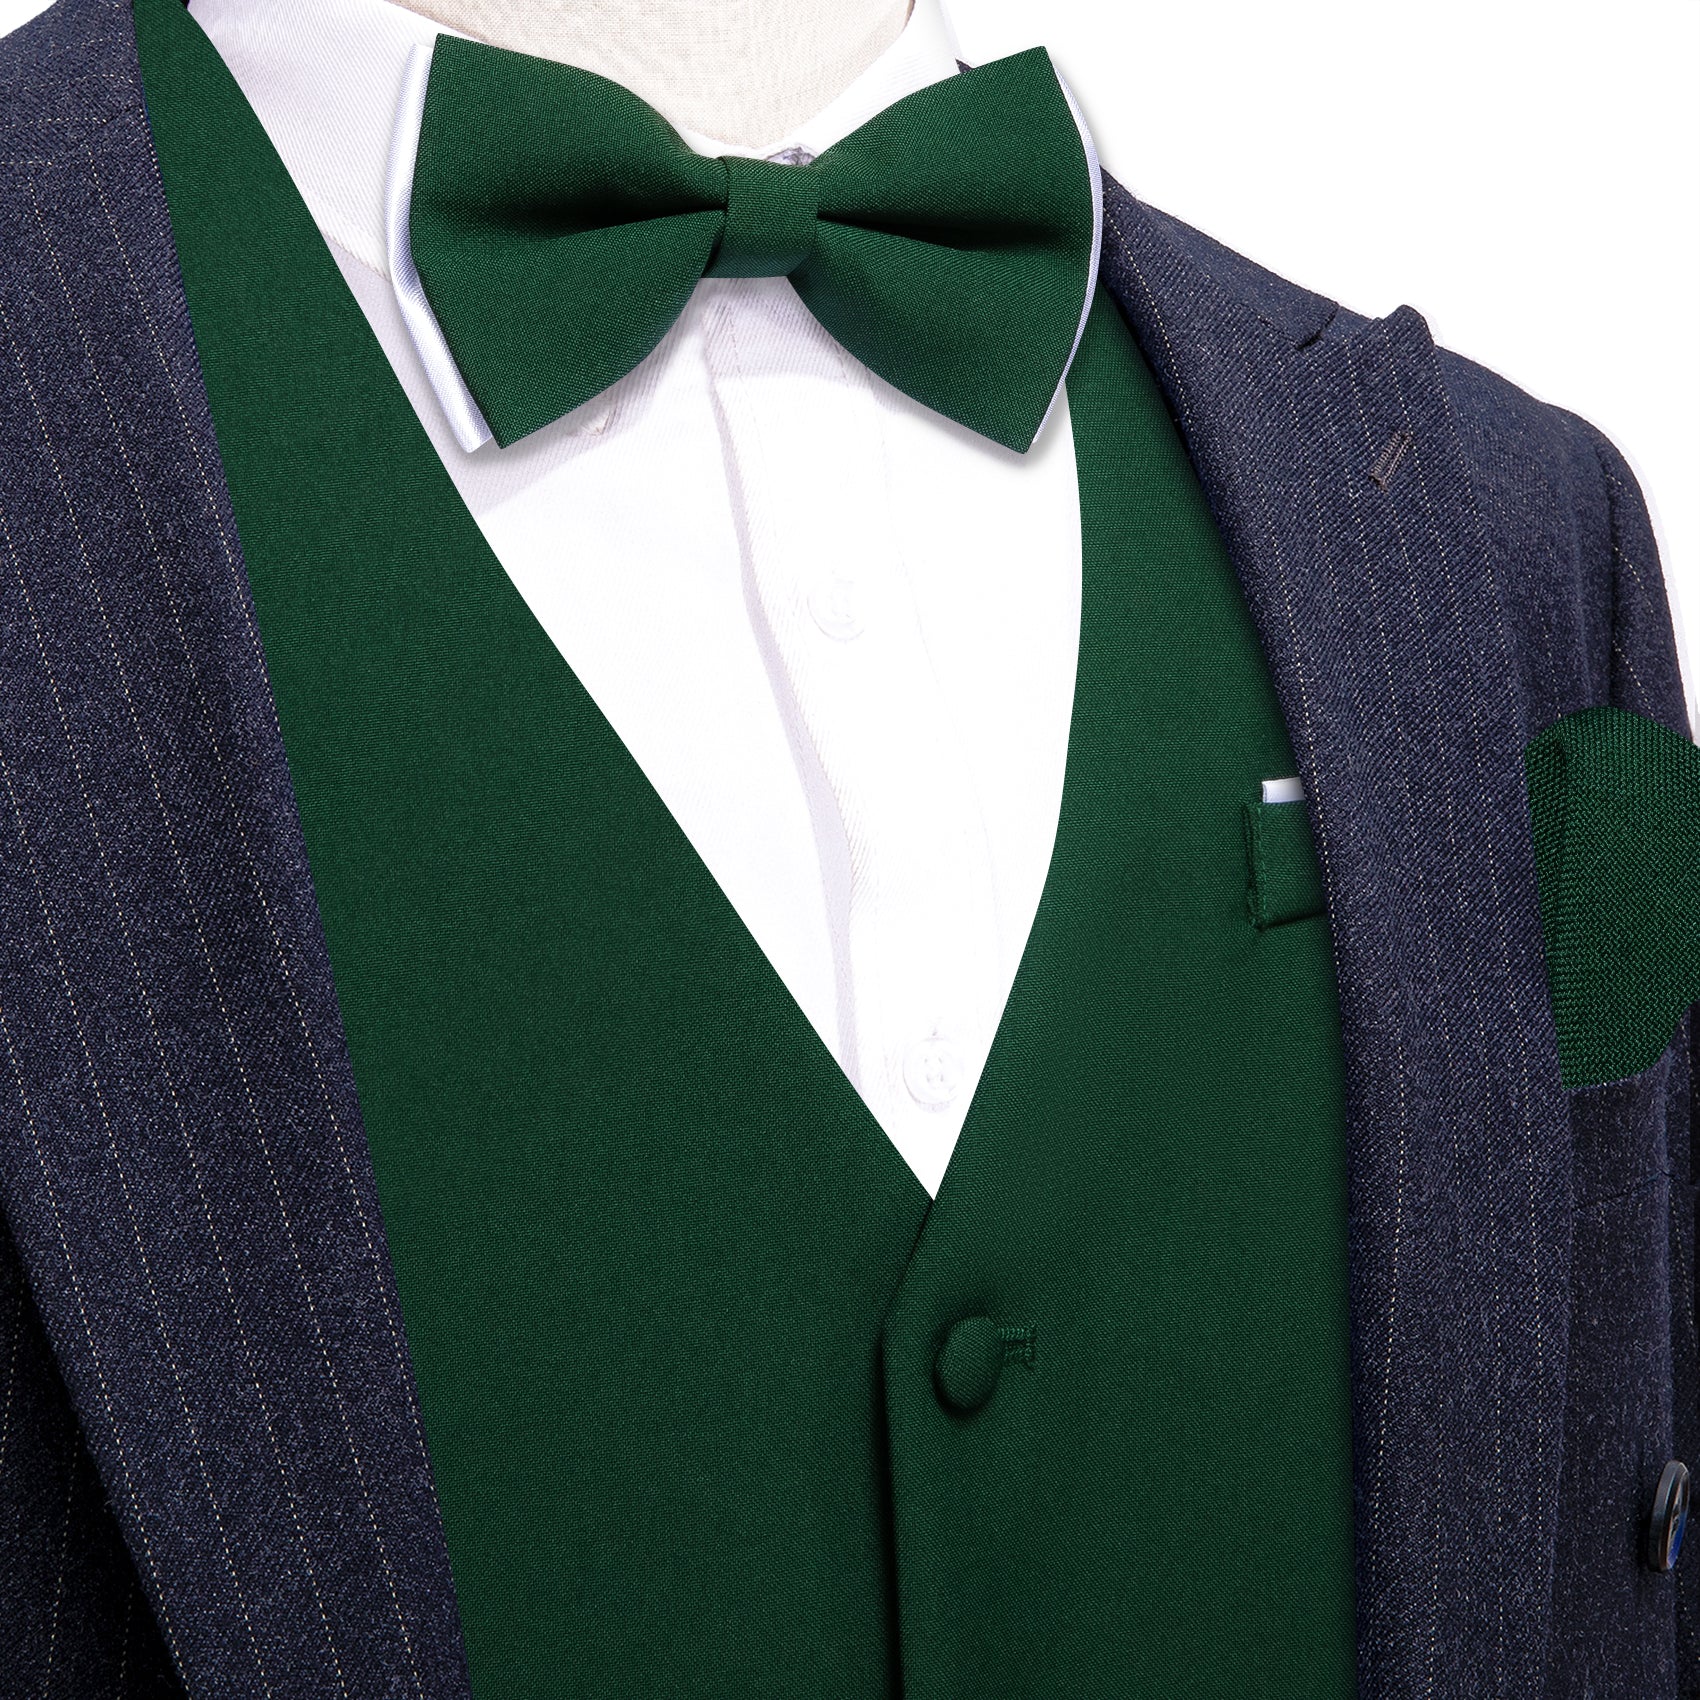 Green Solid Silk Vest Bowtie Pocket Square Cufflinks Set